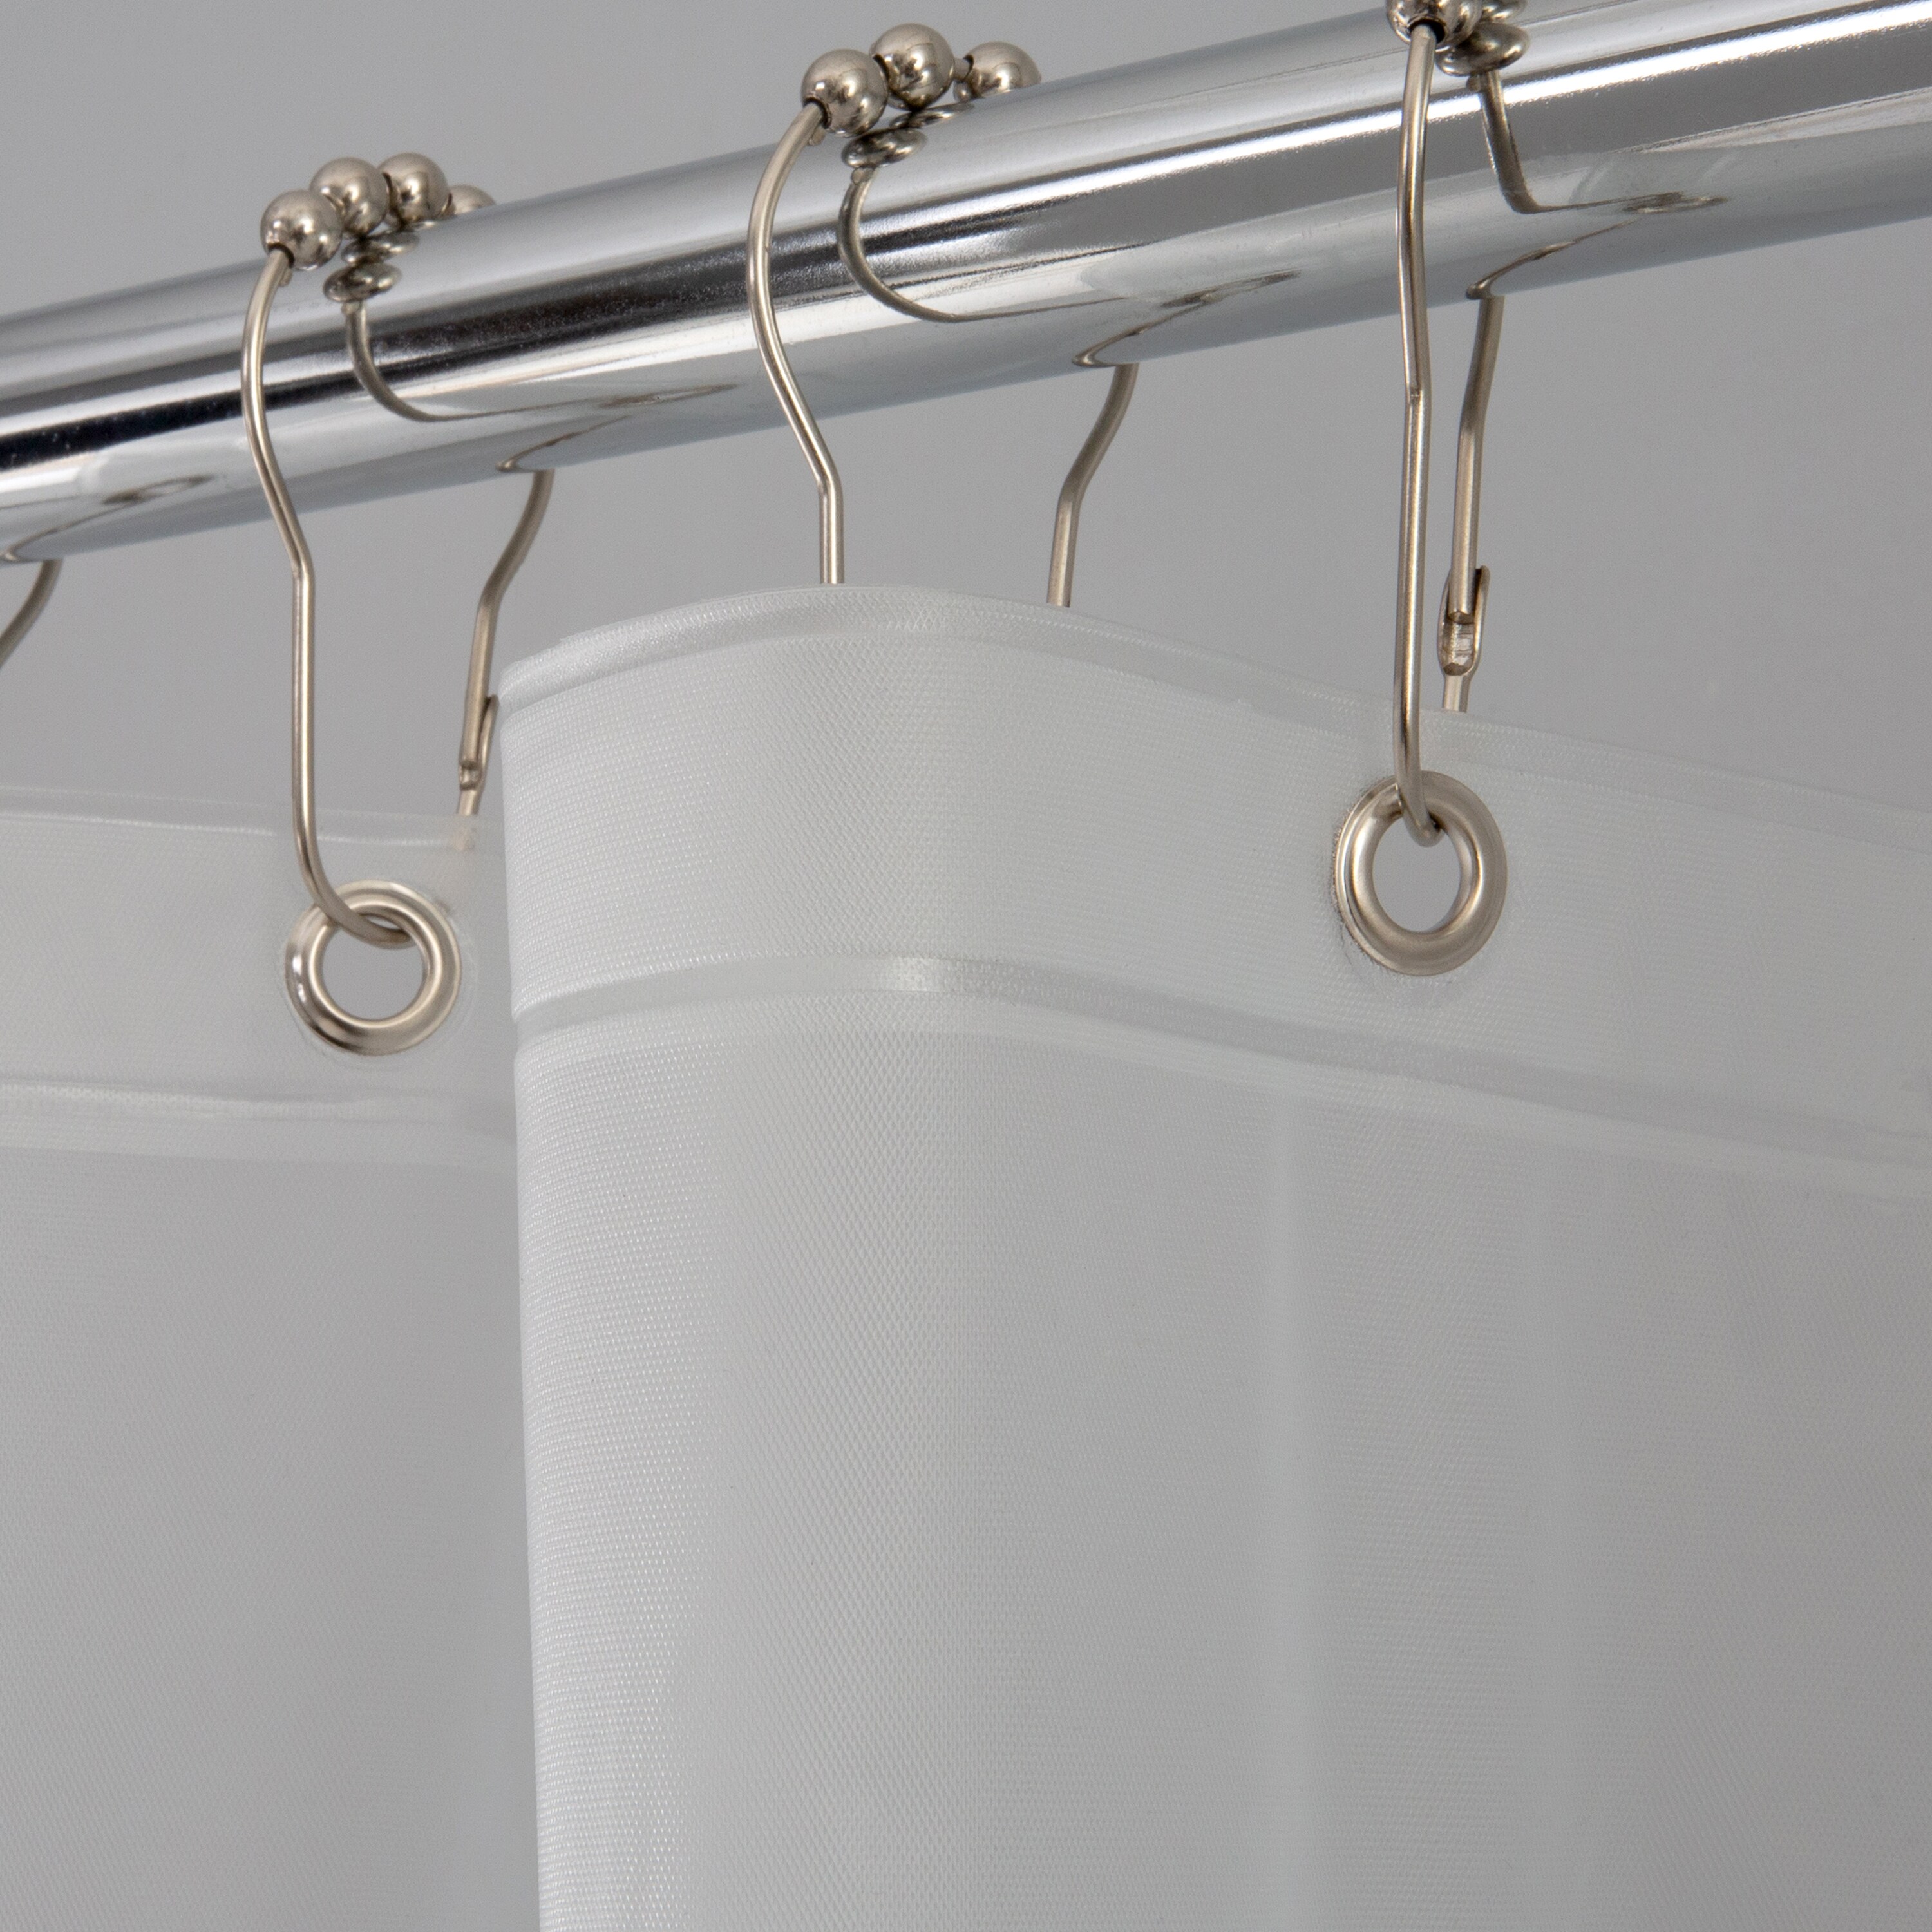 Bath Bliss 72-in W x 70-in L Frost Solid Eva/Peva Shower Curtain